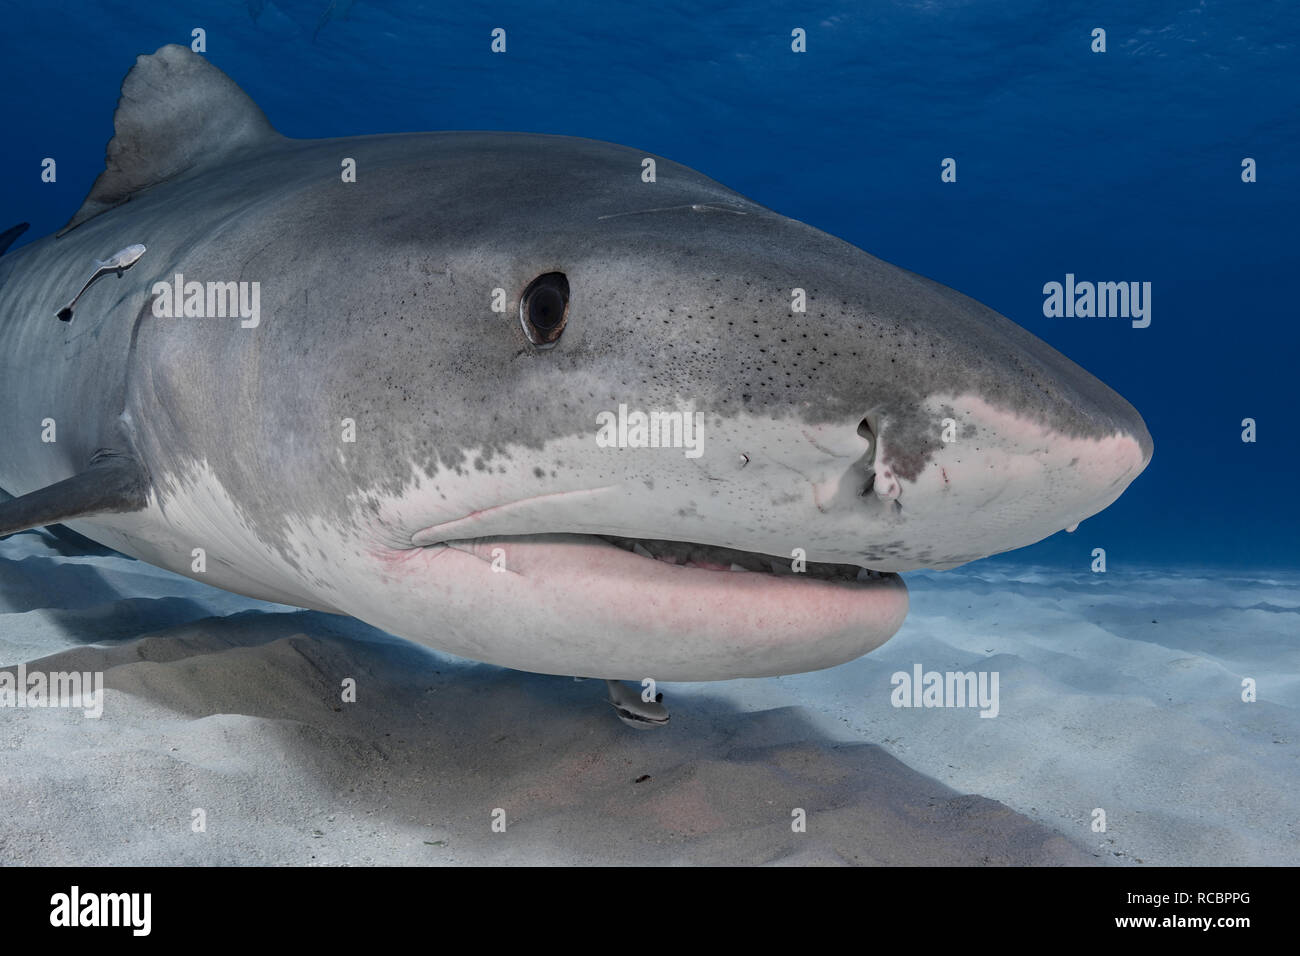 A female tiger shark close-up Stock Photo